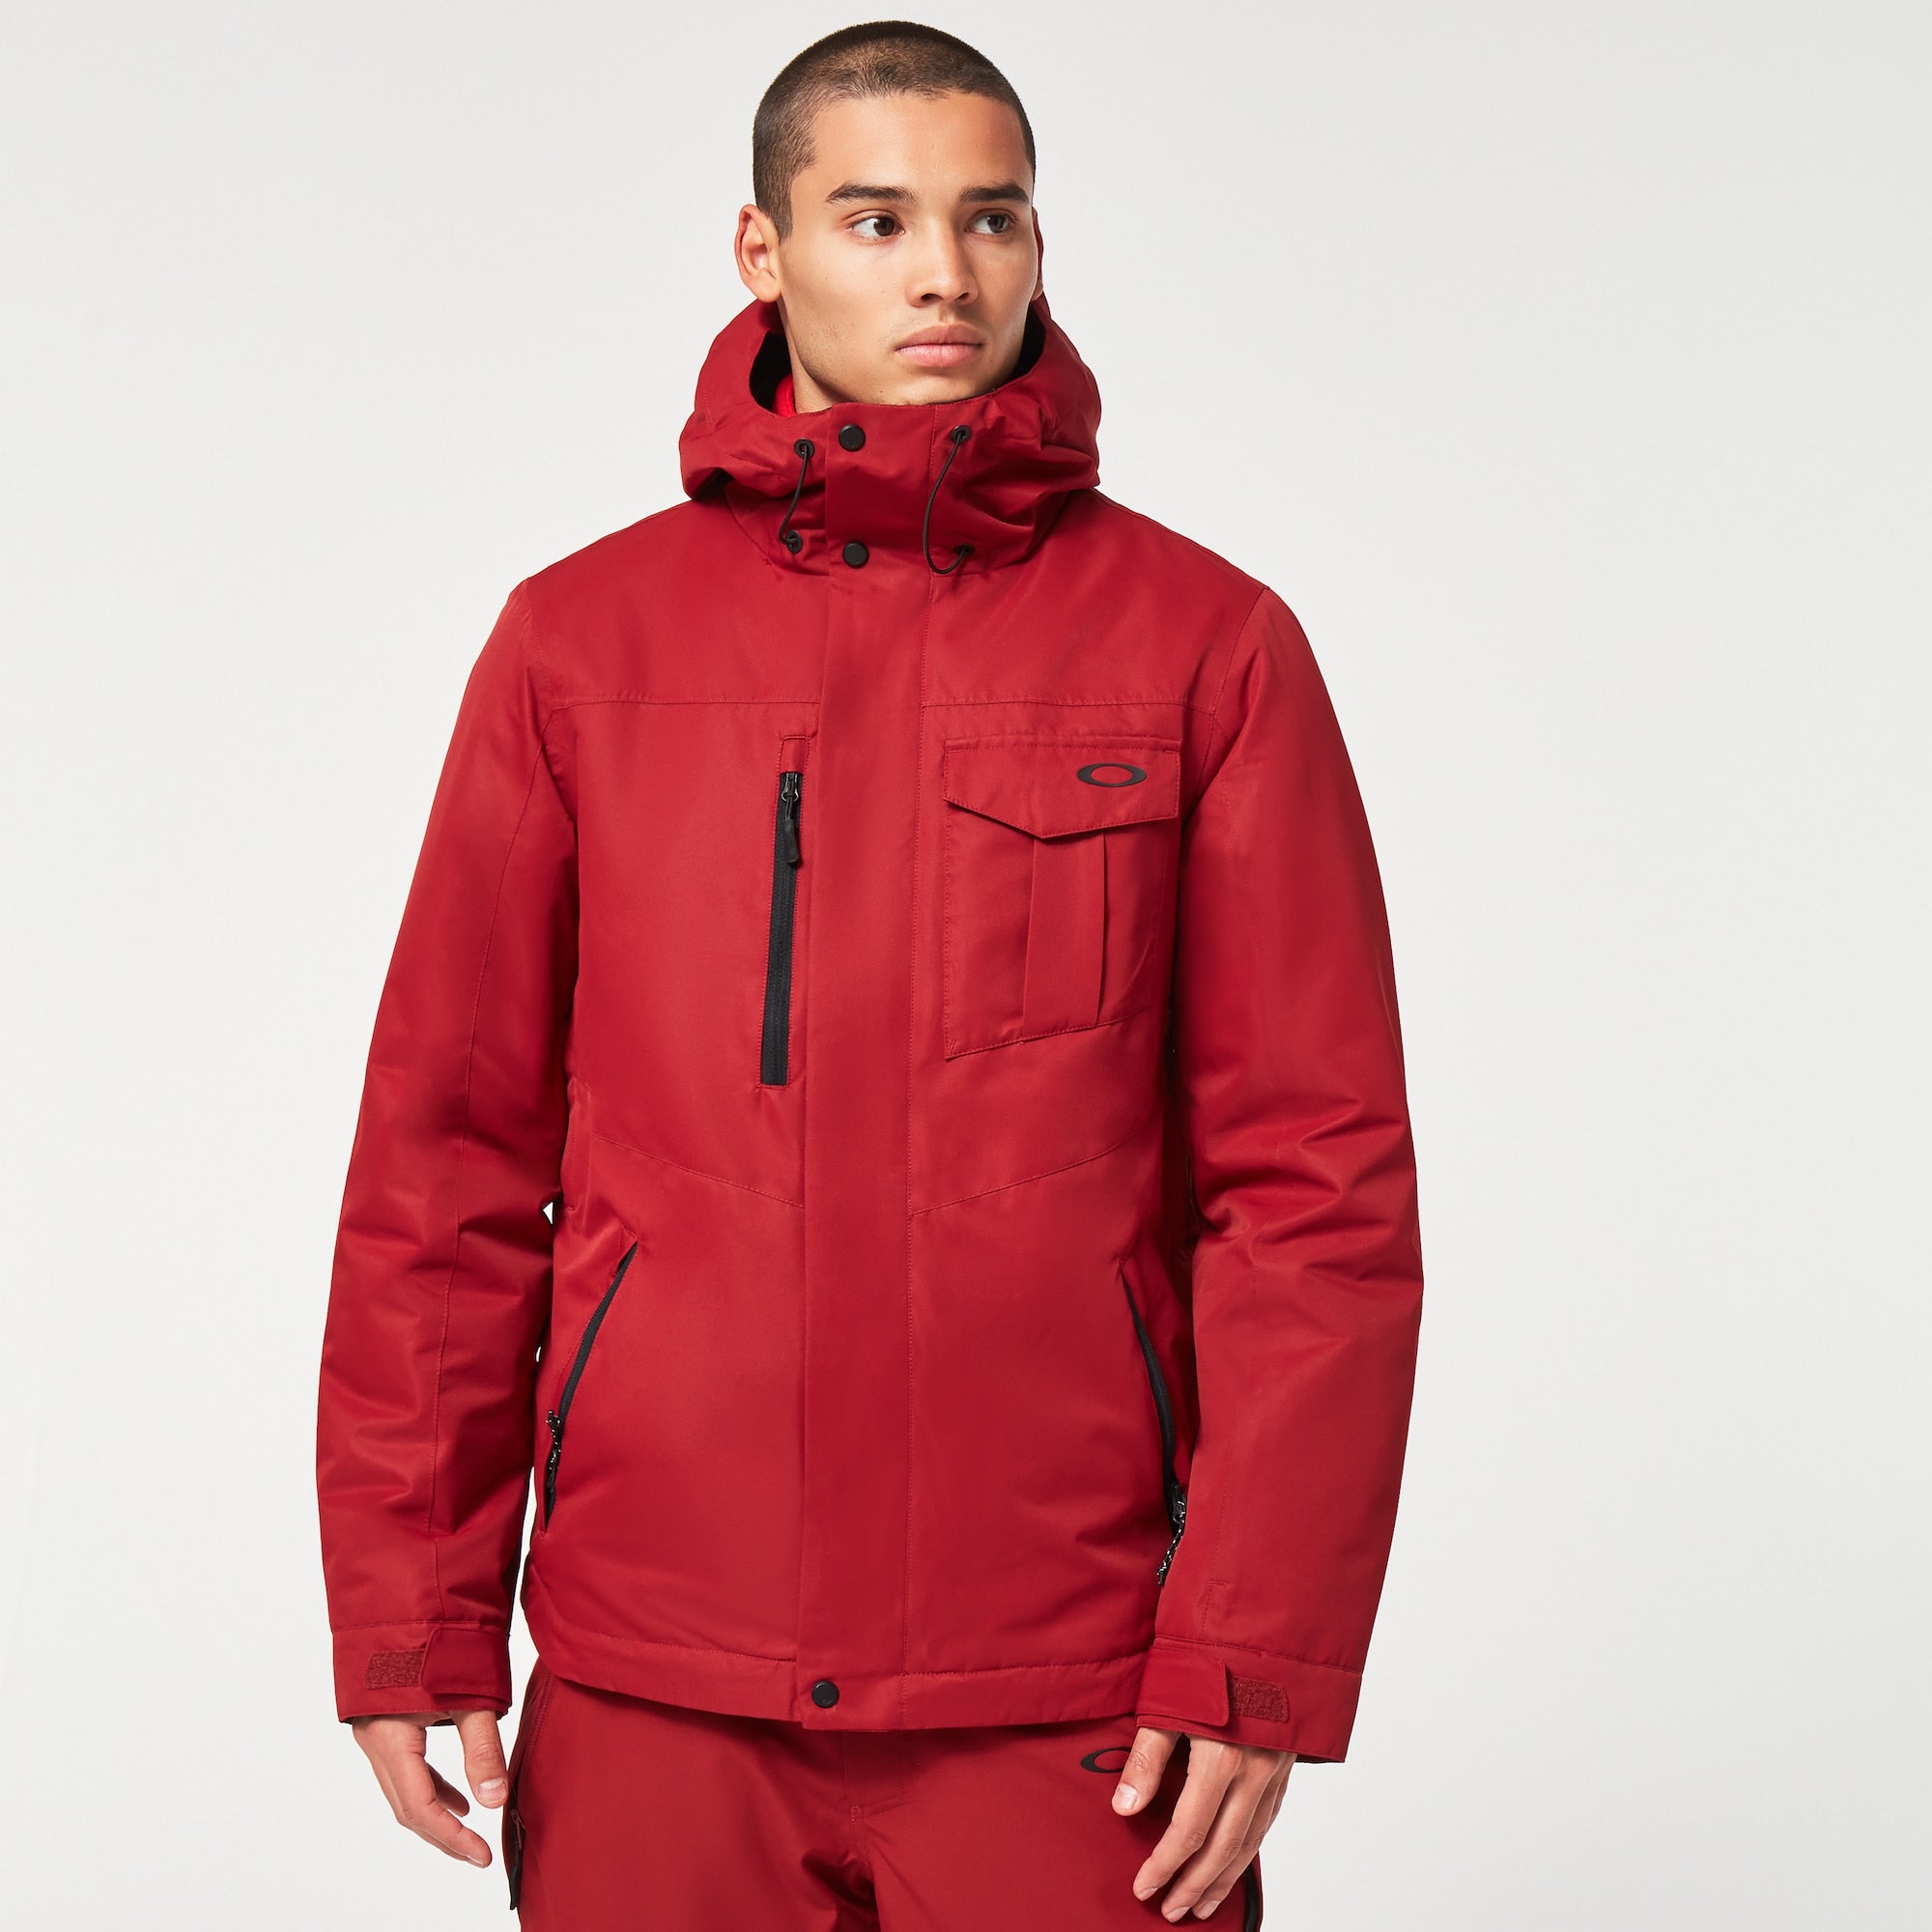 manteau-isole-homme-divisional-red-oakley-sales-outerwear-chapiteau-maheu-go-sport-01